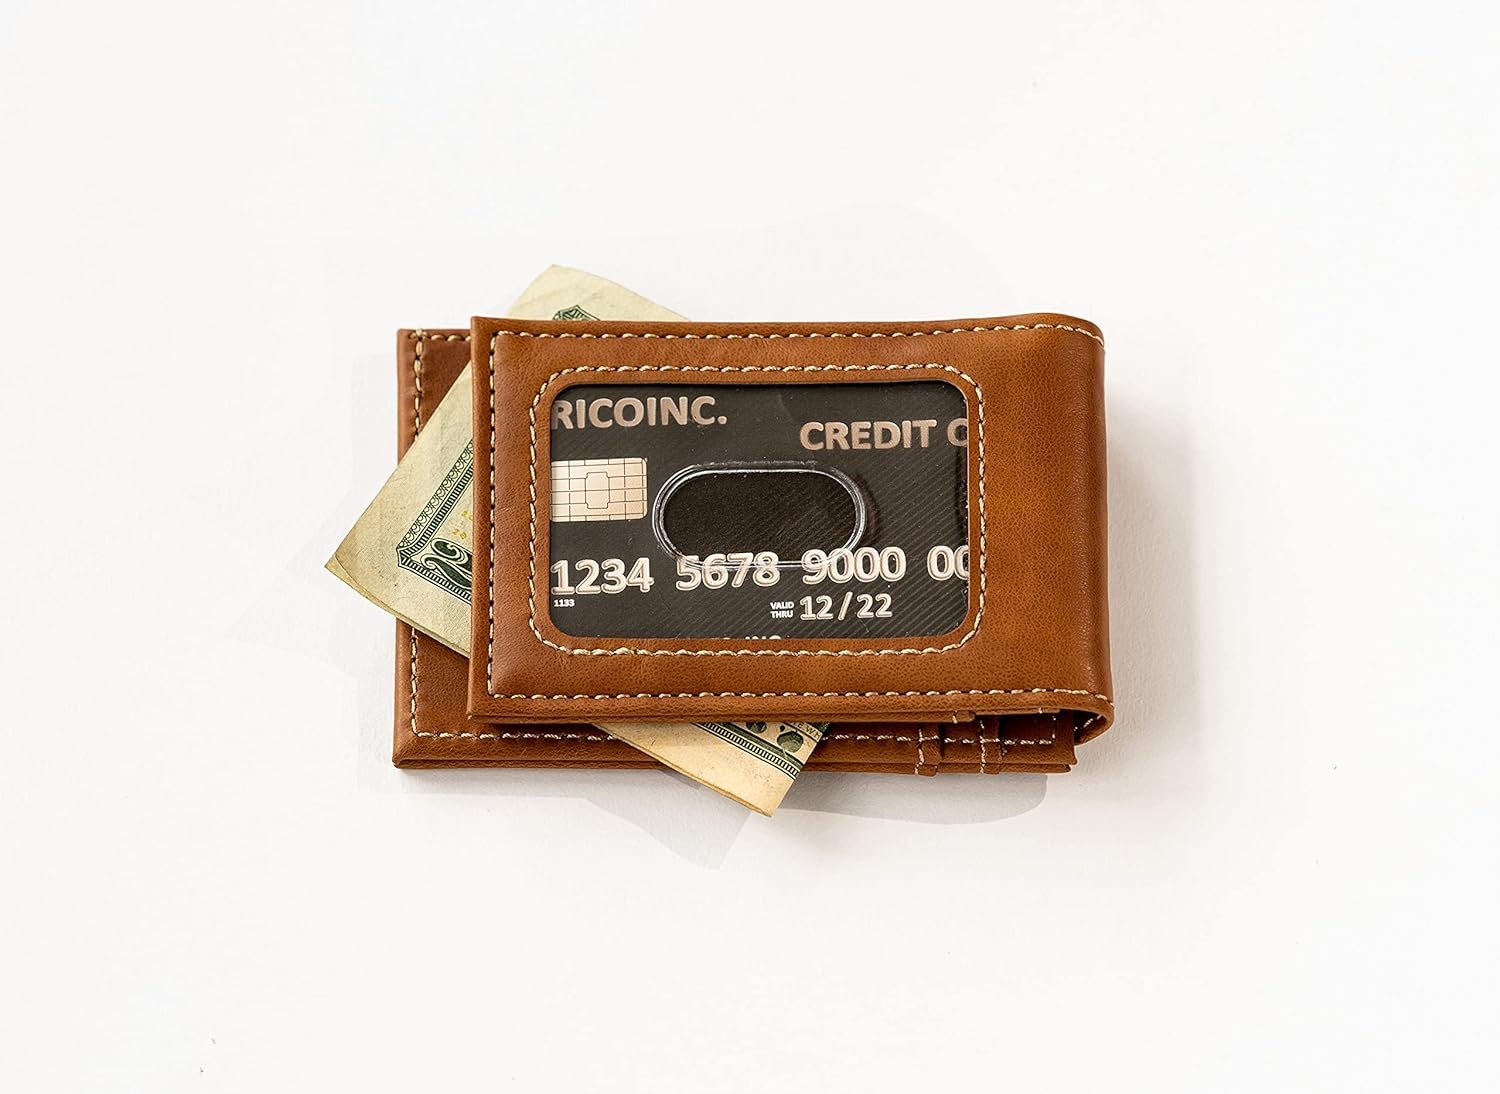 New England Patriots Premium Brown Leather Wallet, Front Pocket Magnetic Money Clip, Laser Engraved, Vegan